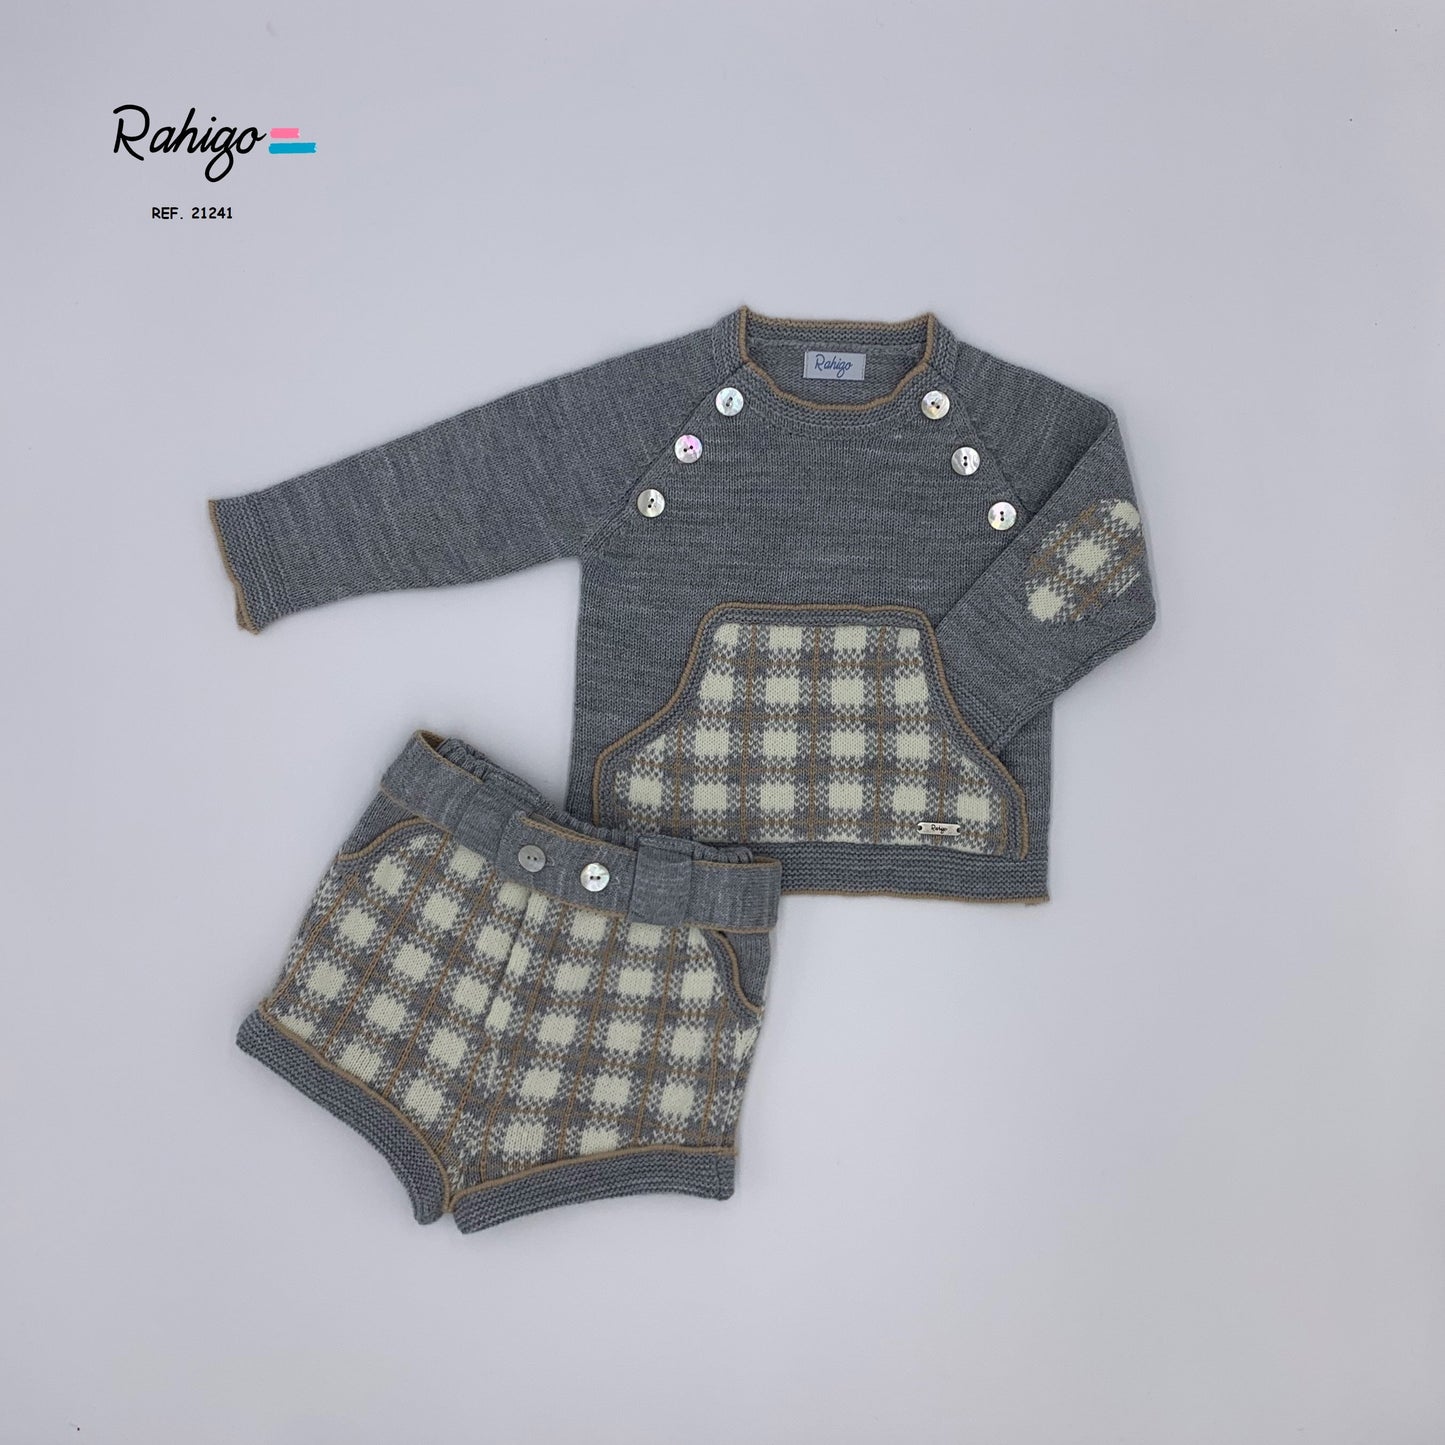 AW21 RAHIGO Grey & Camel Baby Boys Knitted Short Set - 21241